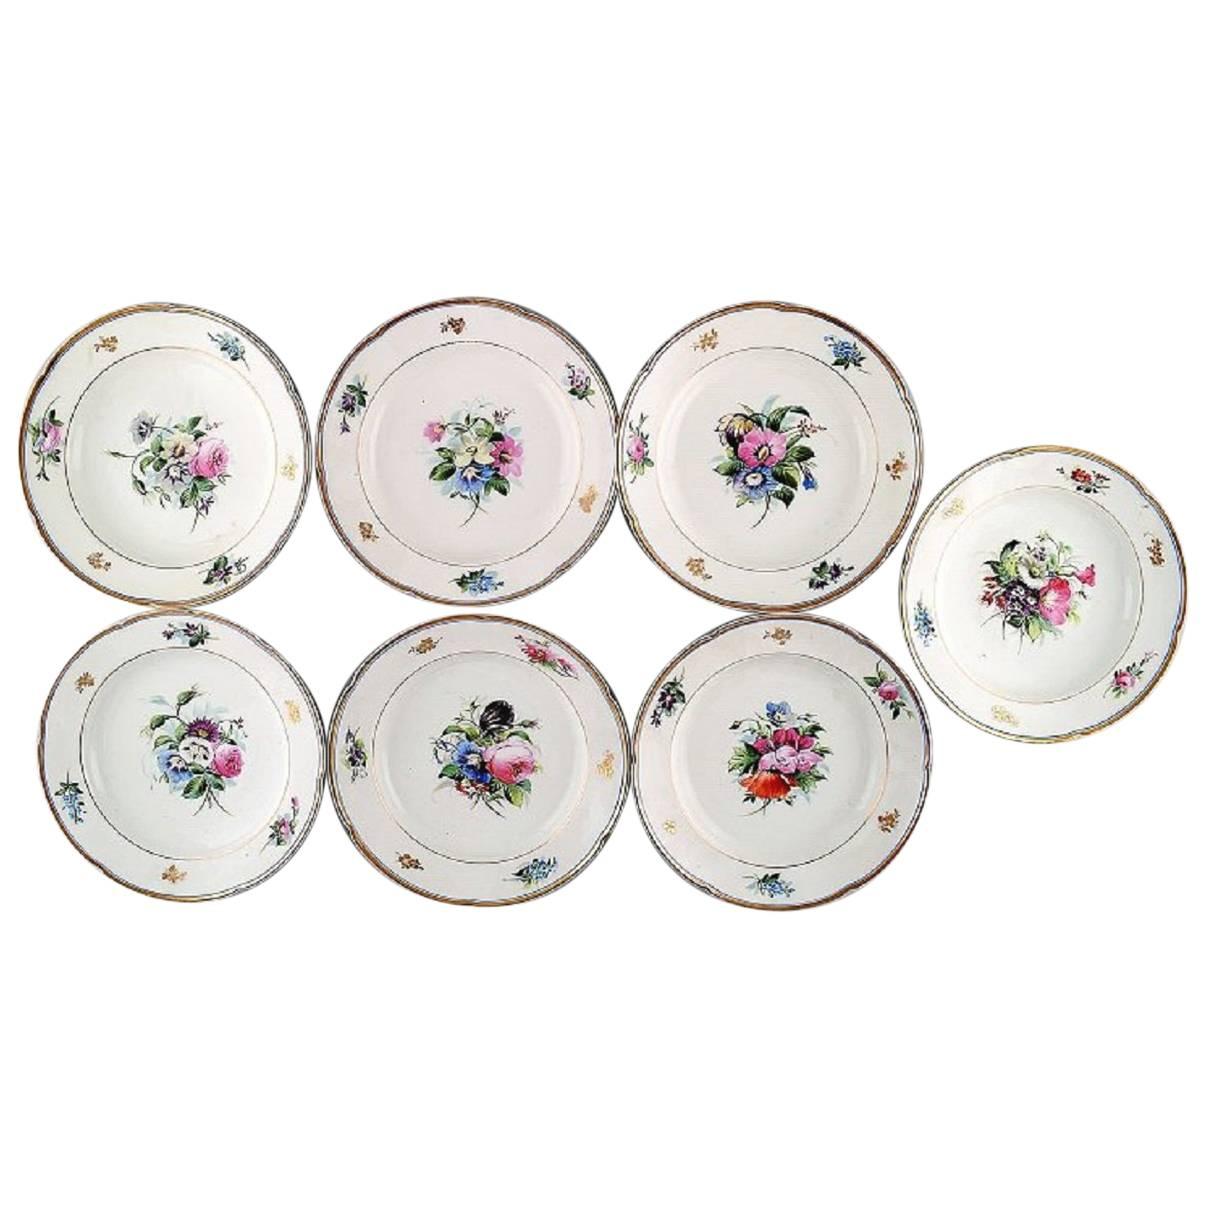 7 antique b&g bing & grøndahl deep plates. Hand painted with flowers